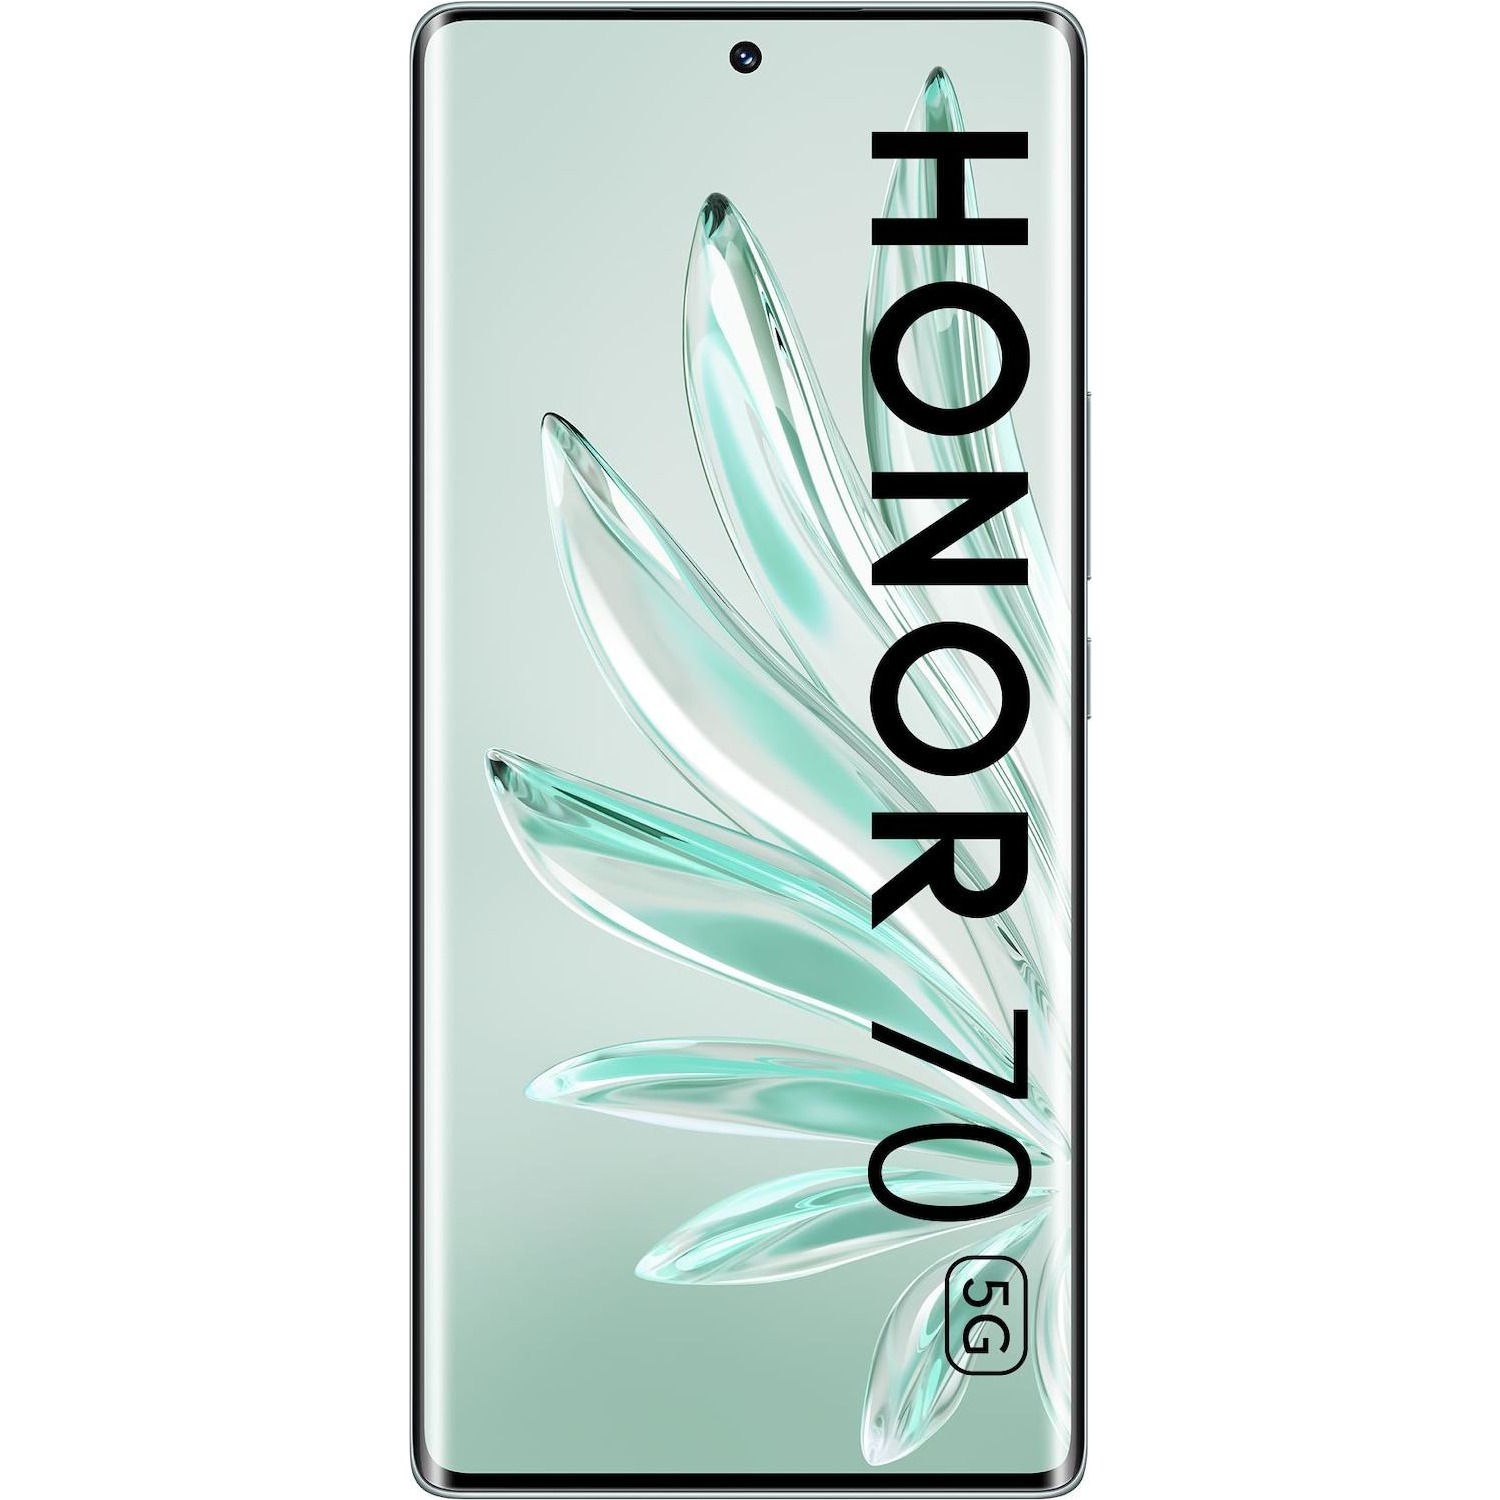 Immagine per Smartphone Honor 70 5G green verde da DIMOStore